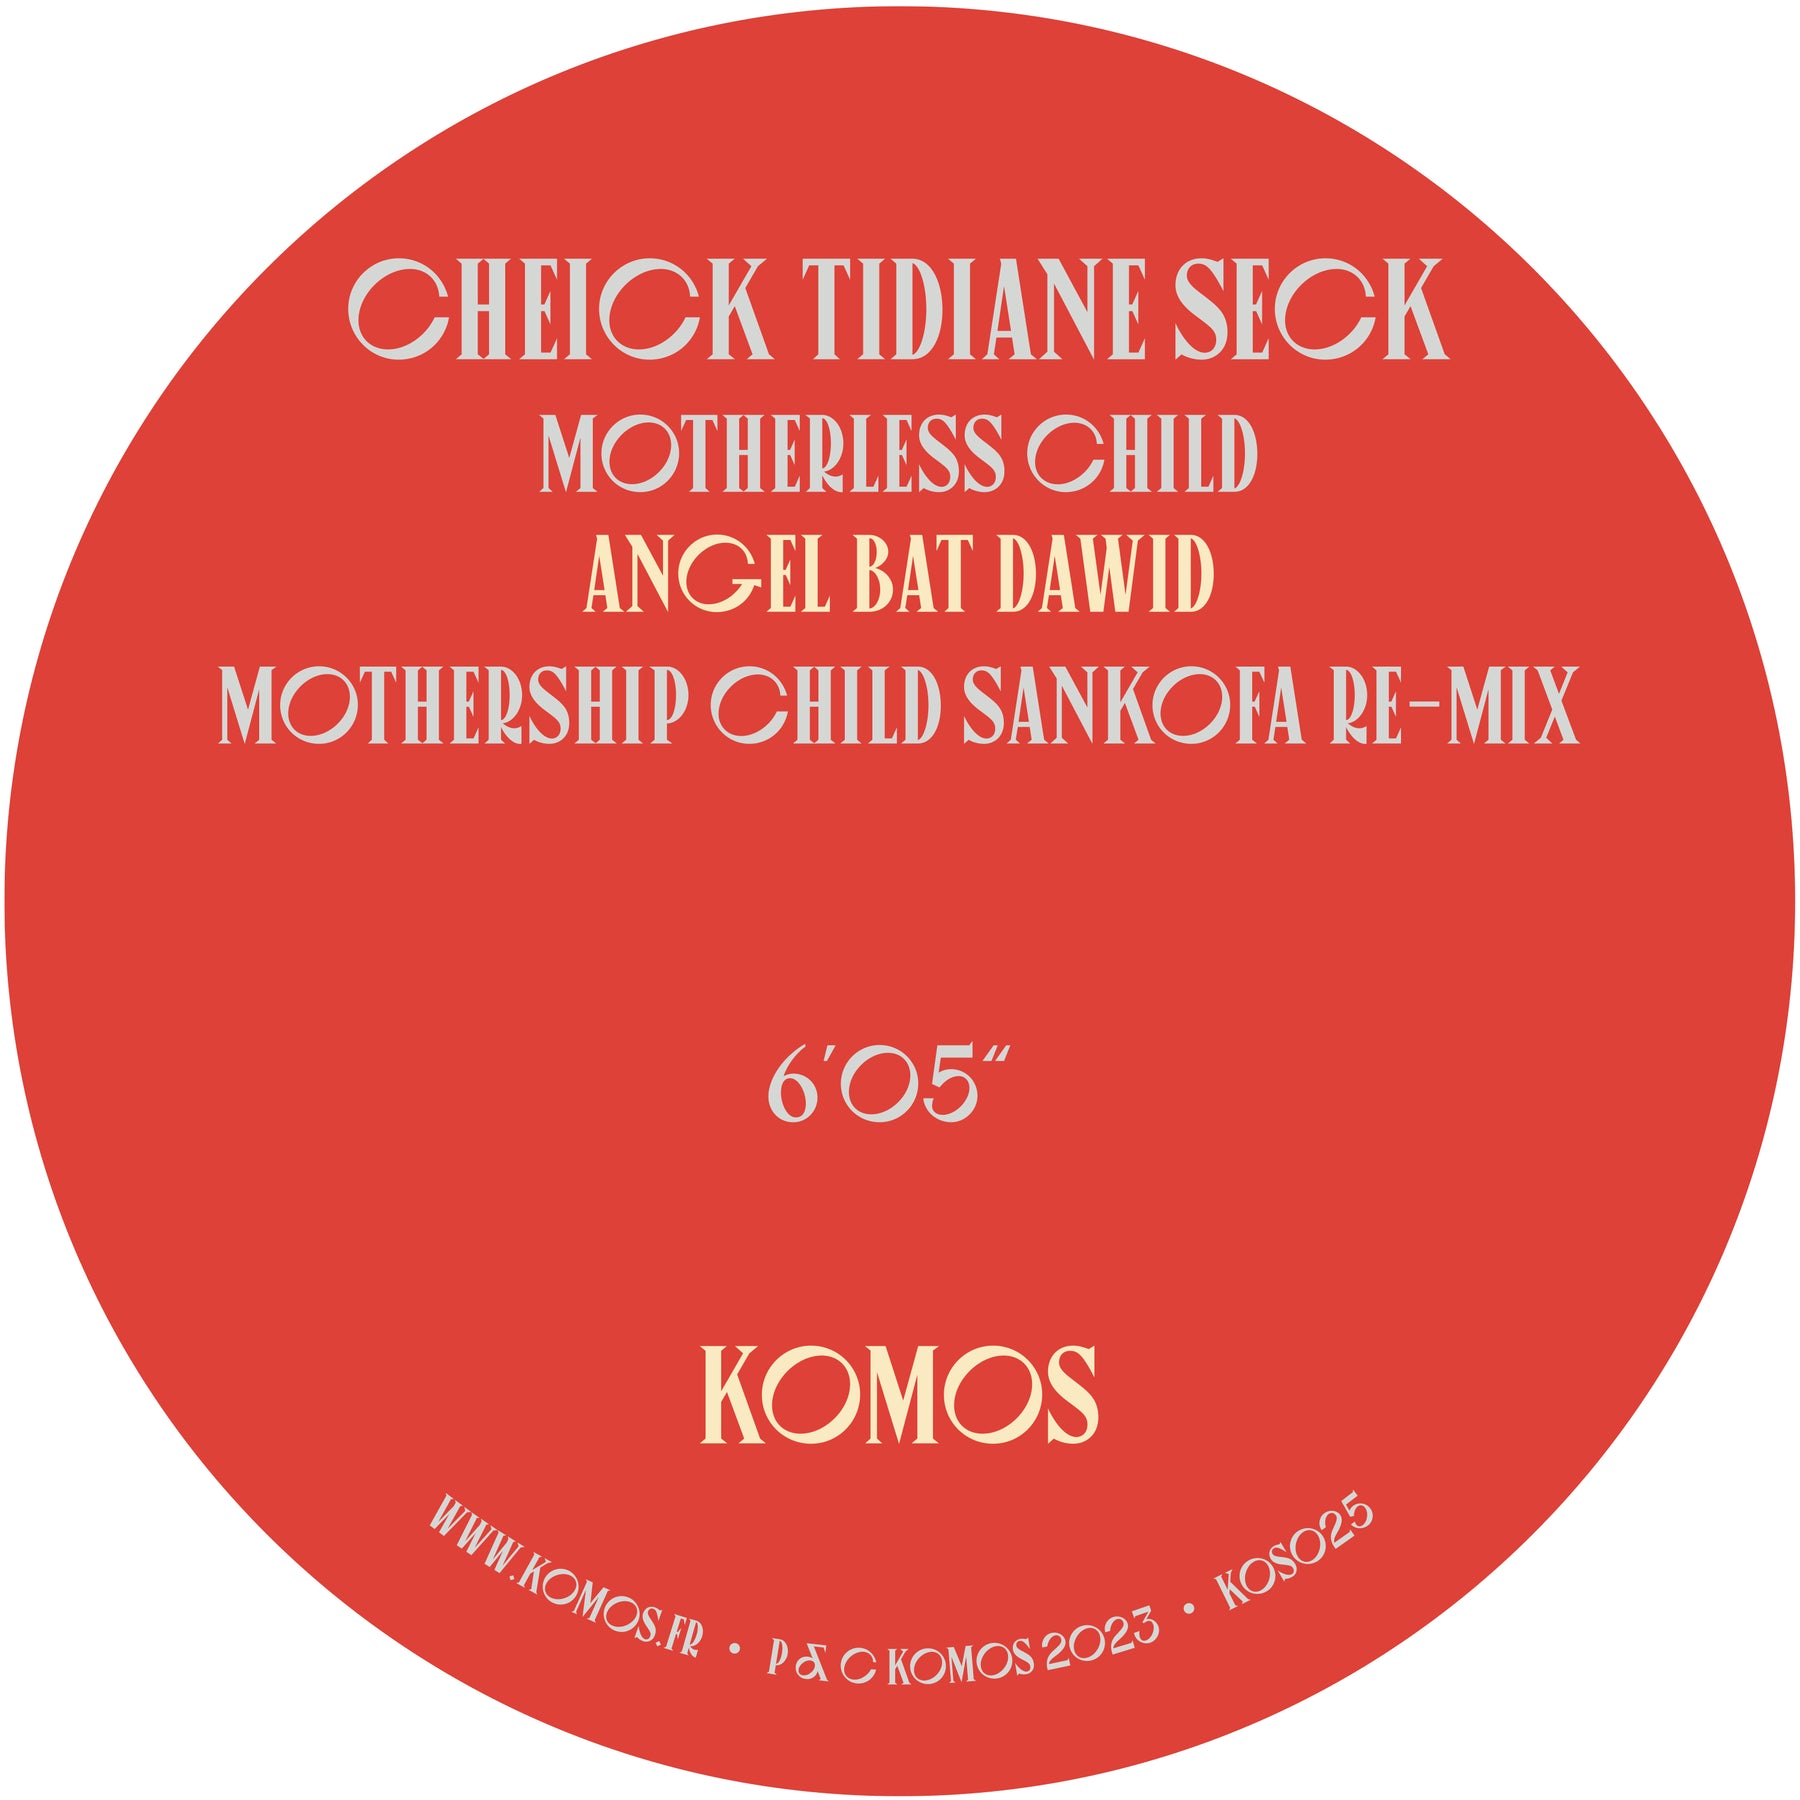 Tenafaqit - Danilo Plessow Remix / Motherless Child - Angel Bat Dawid Mothership Child Sankofa Re-mix